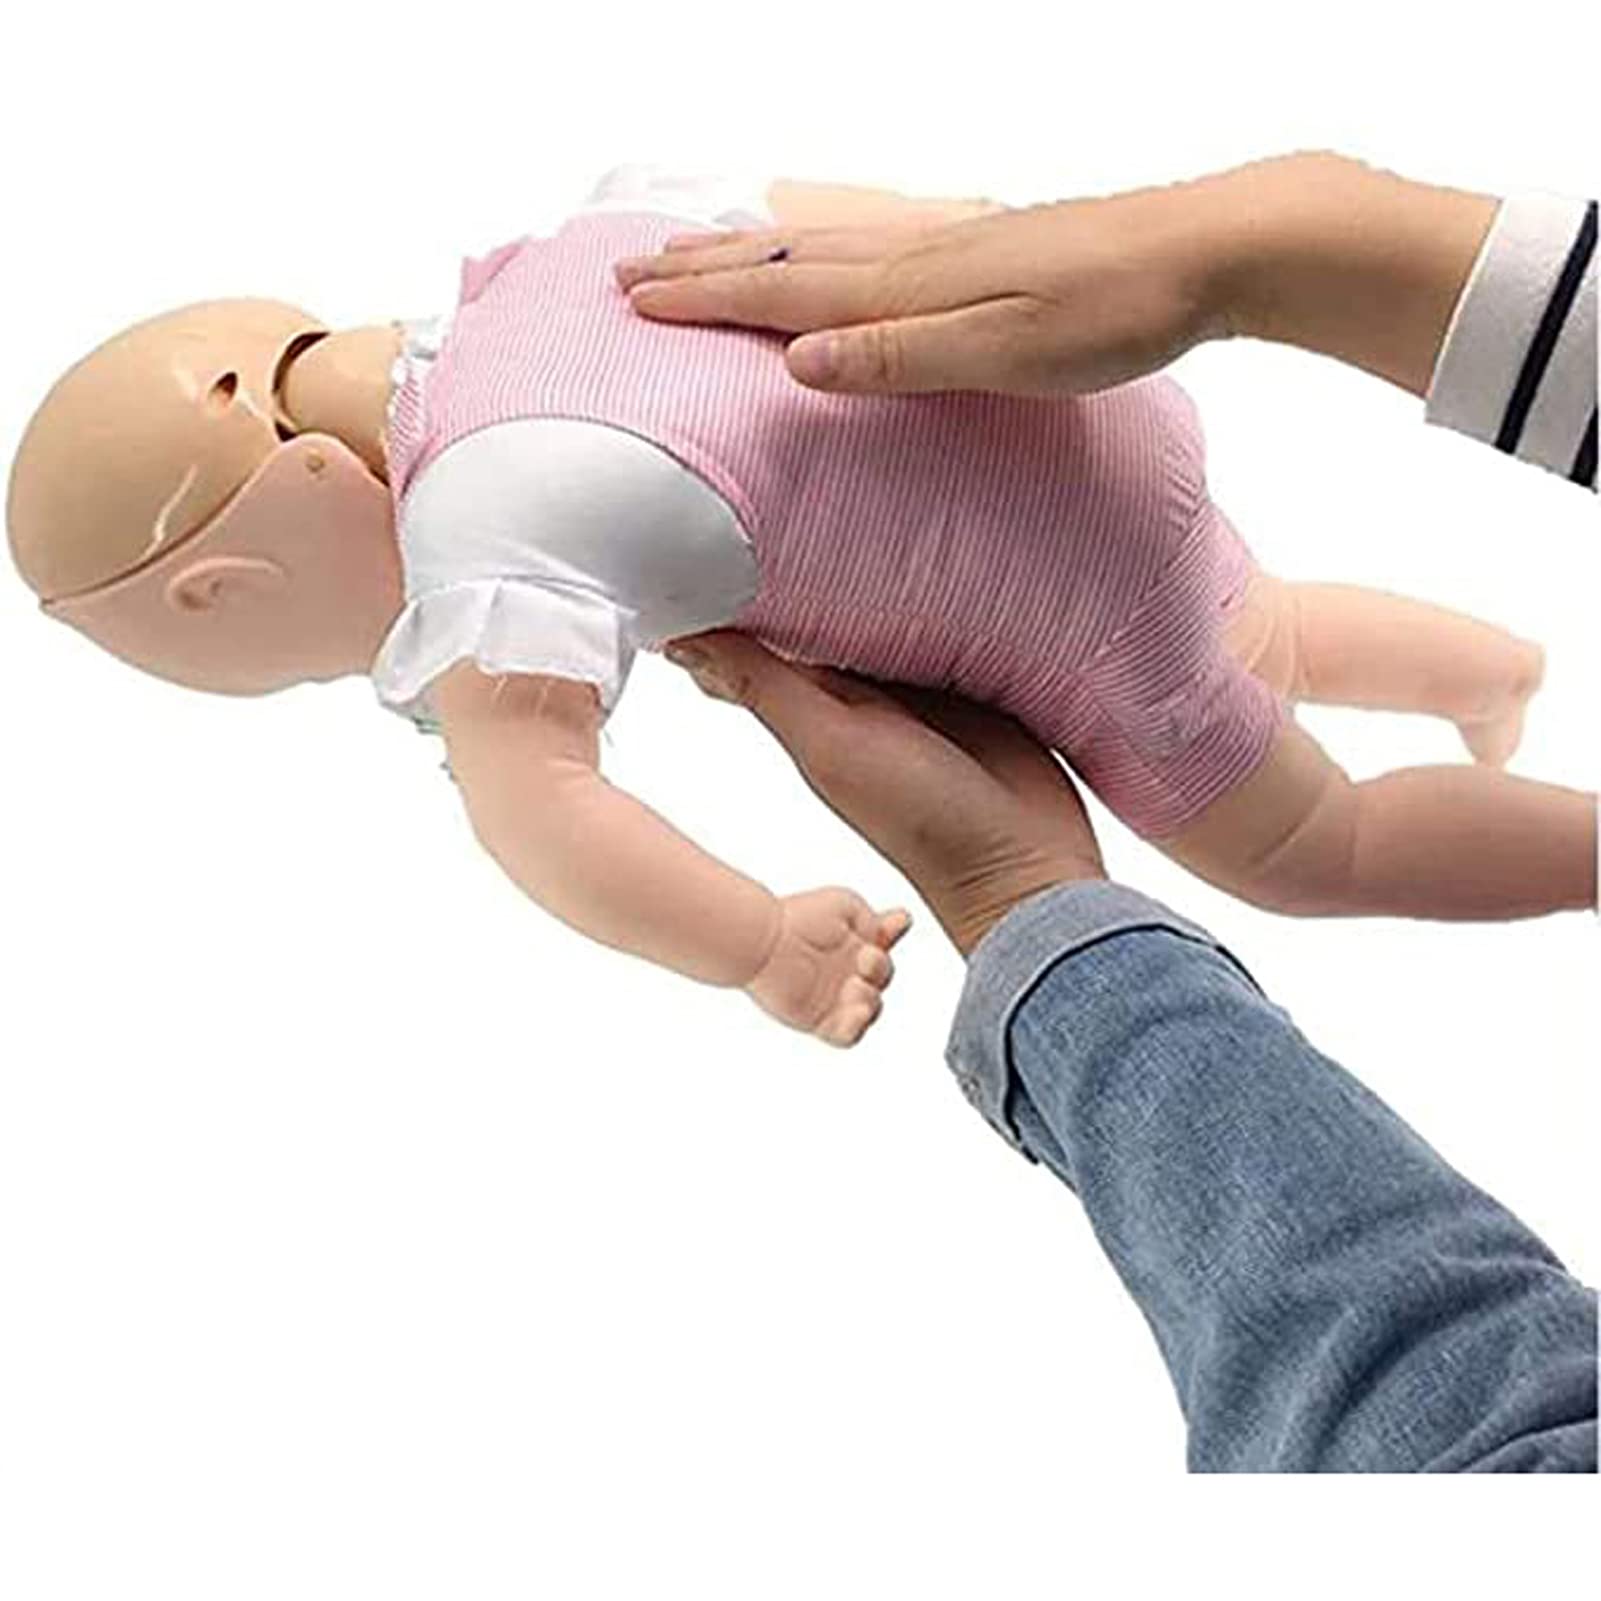 Baby CPR training dummy